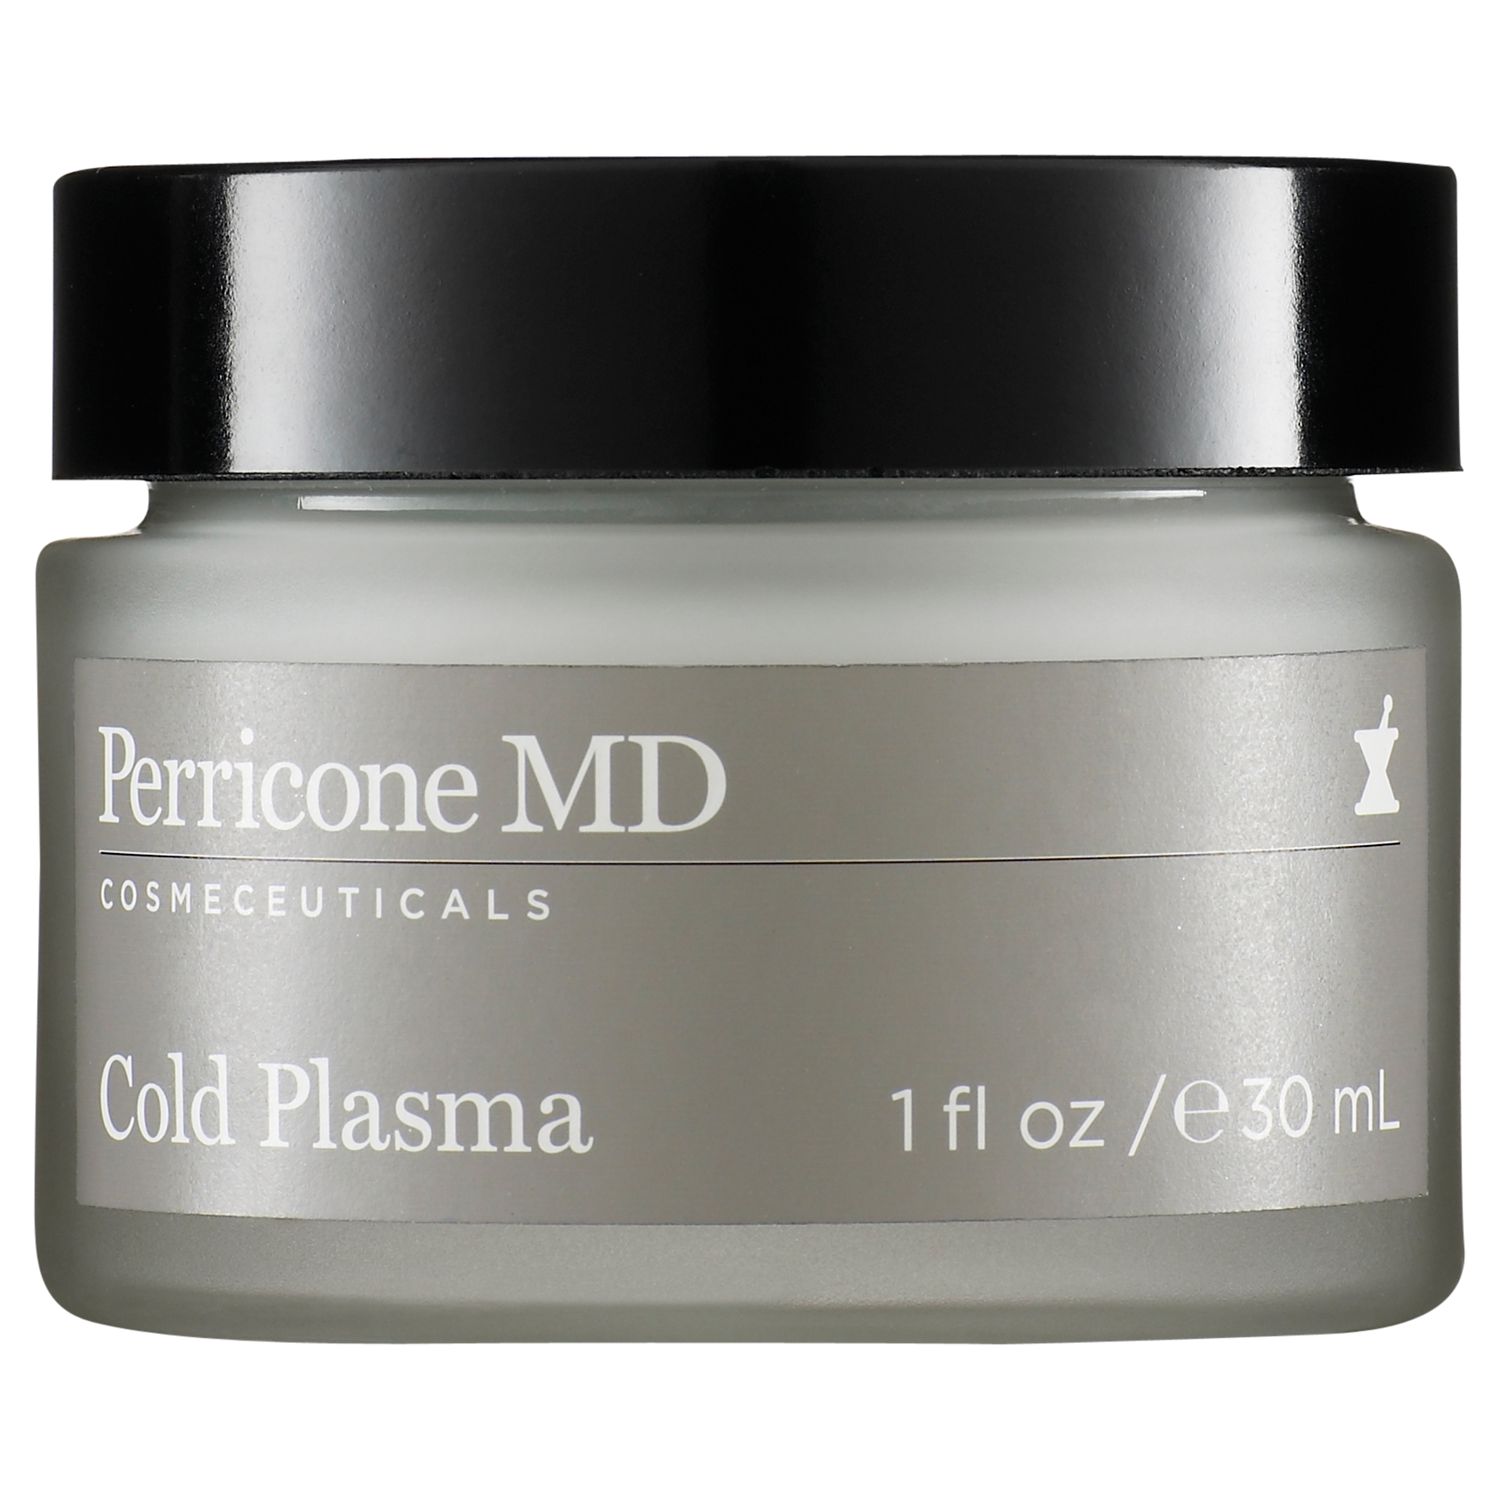 Perricone MD 'Cold Plasma' (1 oz.)